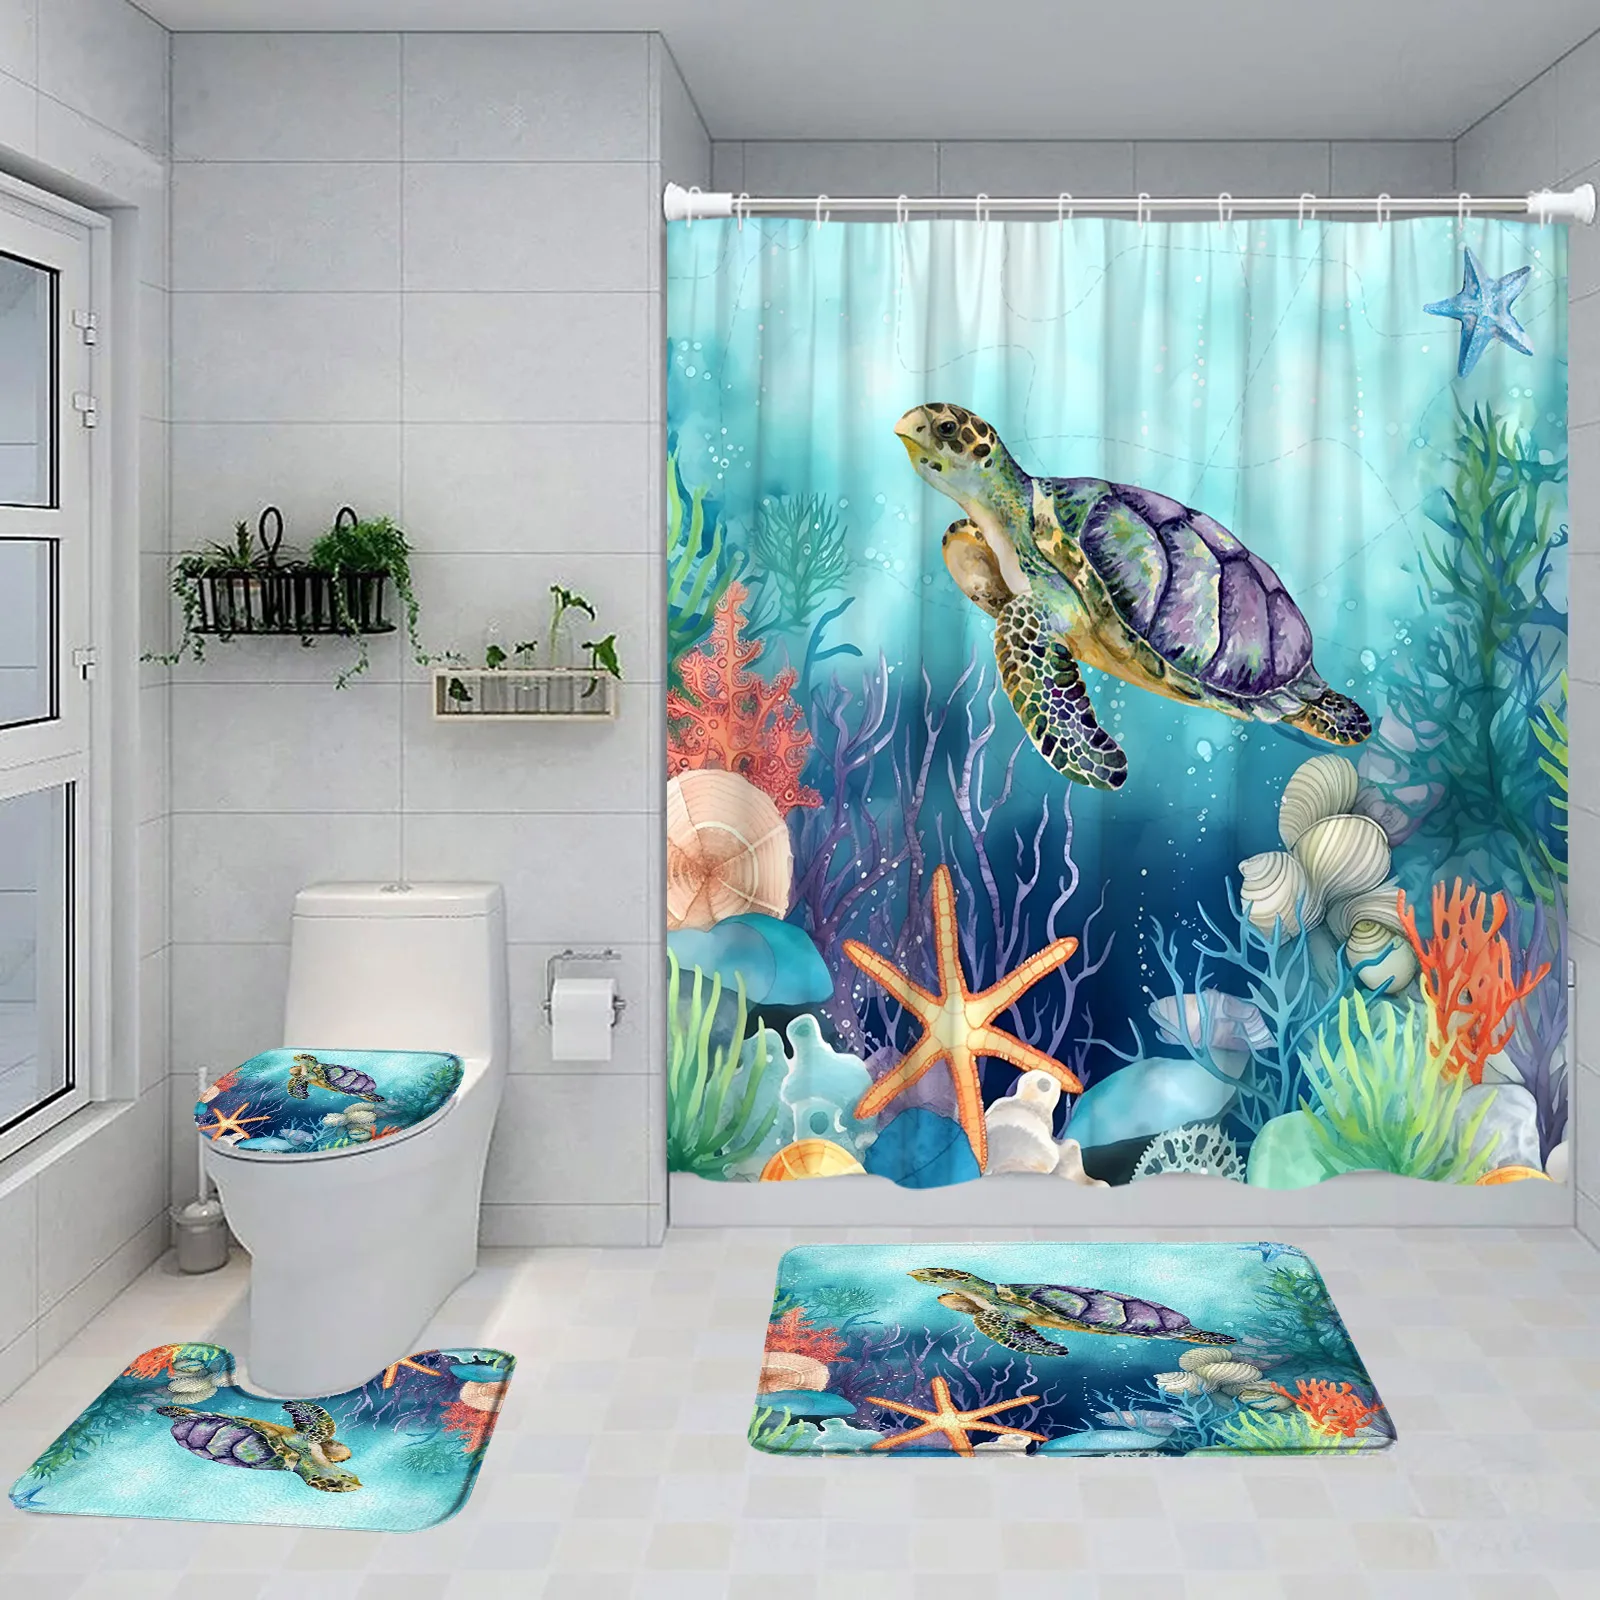 Sea Turtle Shower Curtain Set Starfish Conch Coral Seagrass Ocean Underwater Scenery Bathroom Decor Bath Mats Toilet Lid Cover